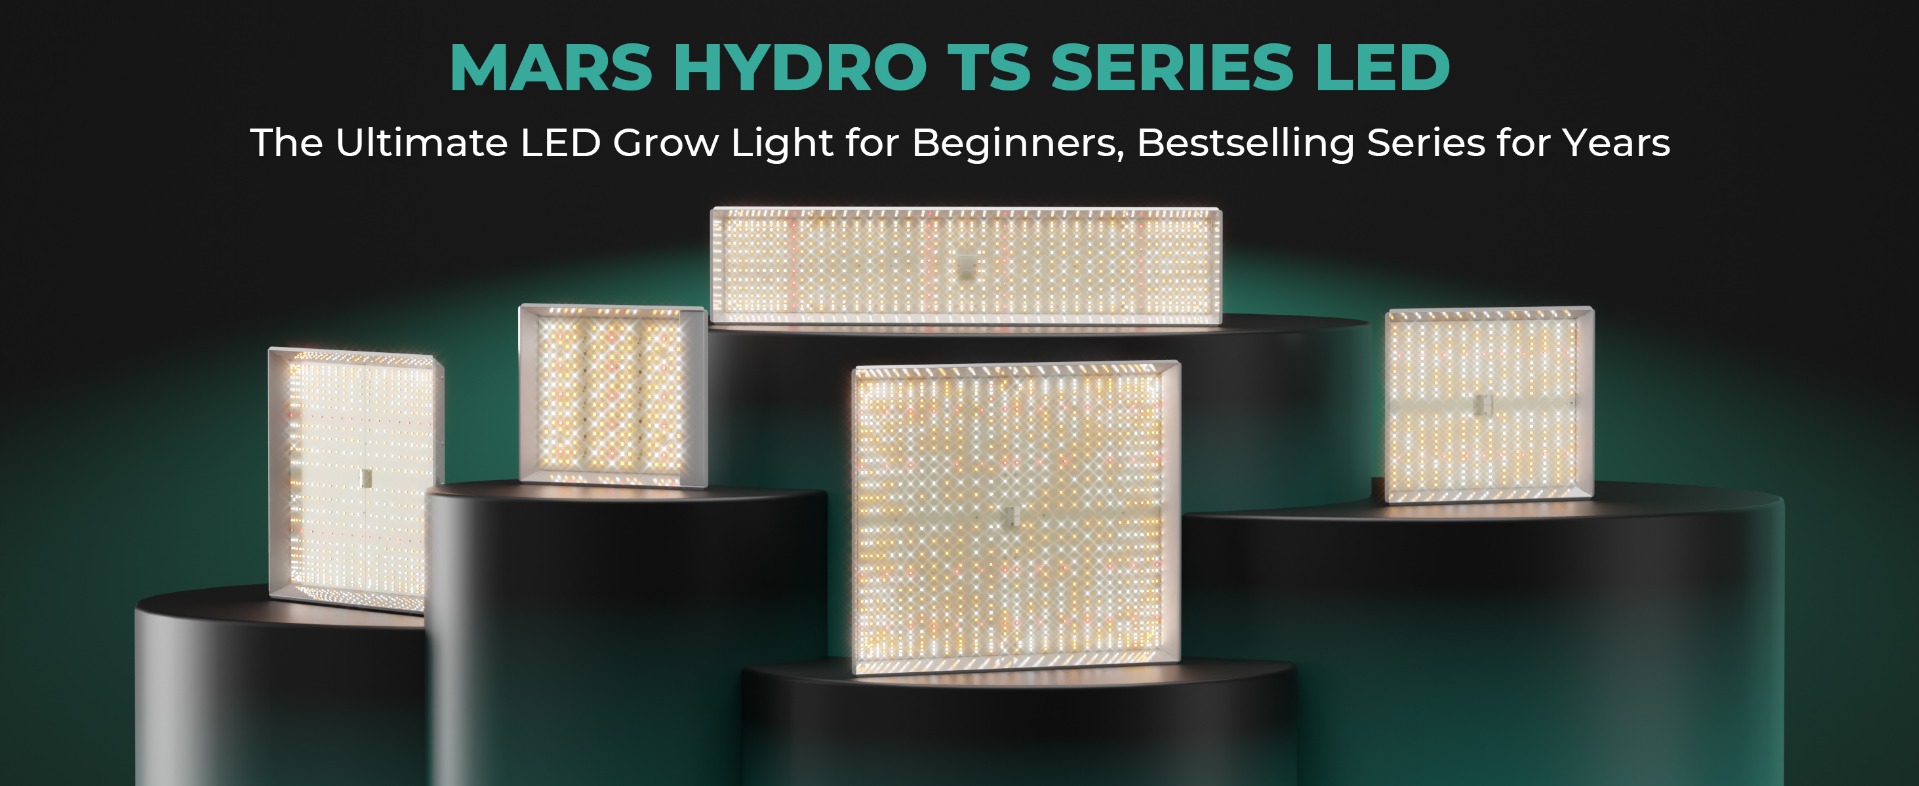 Mars Hydro TS Series Low Energy Consumption LED Grow Light